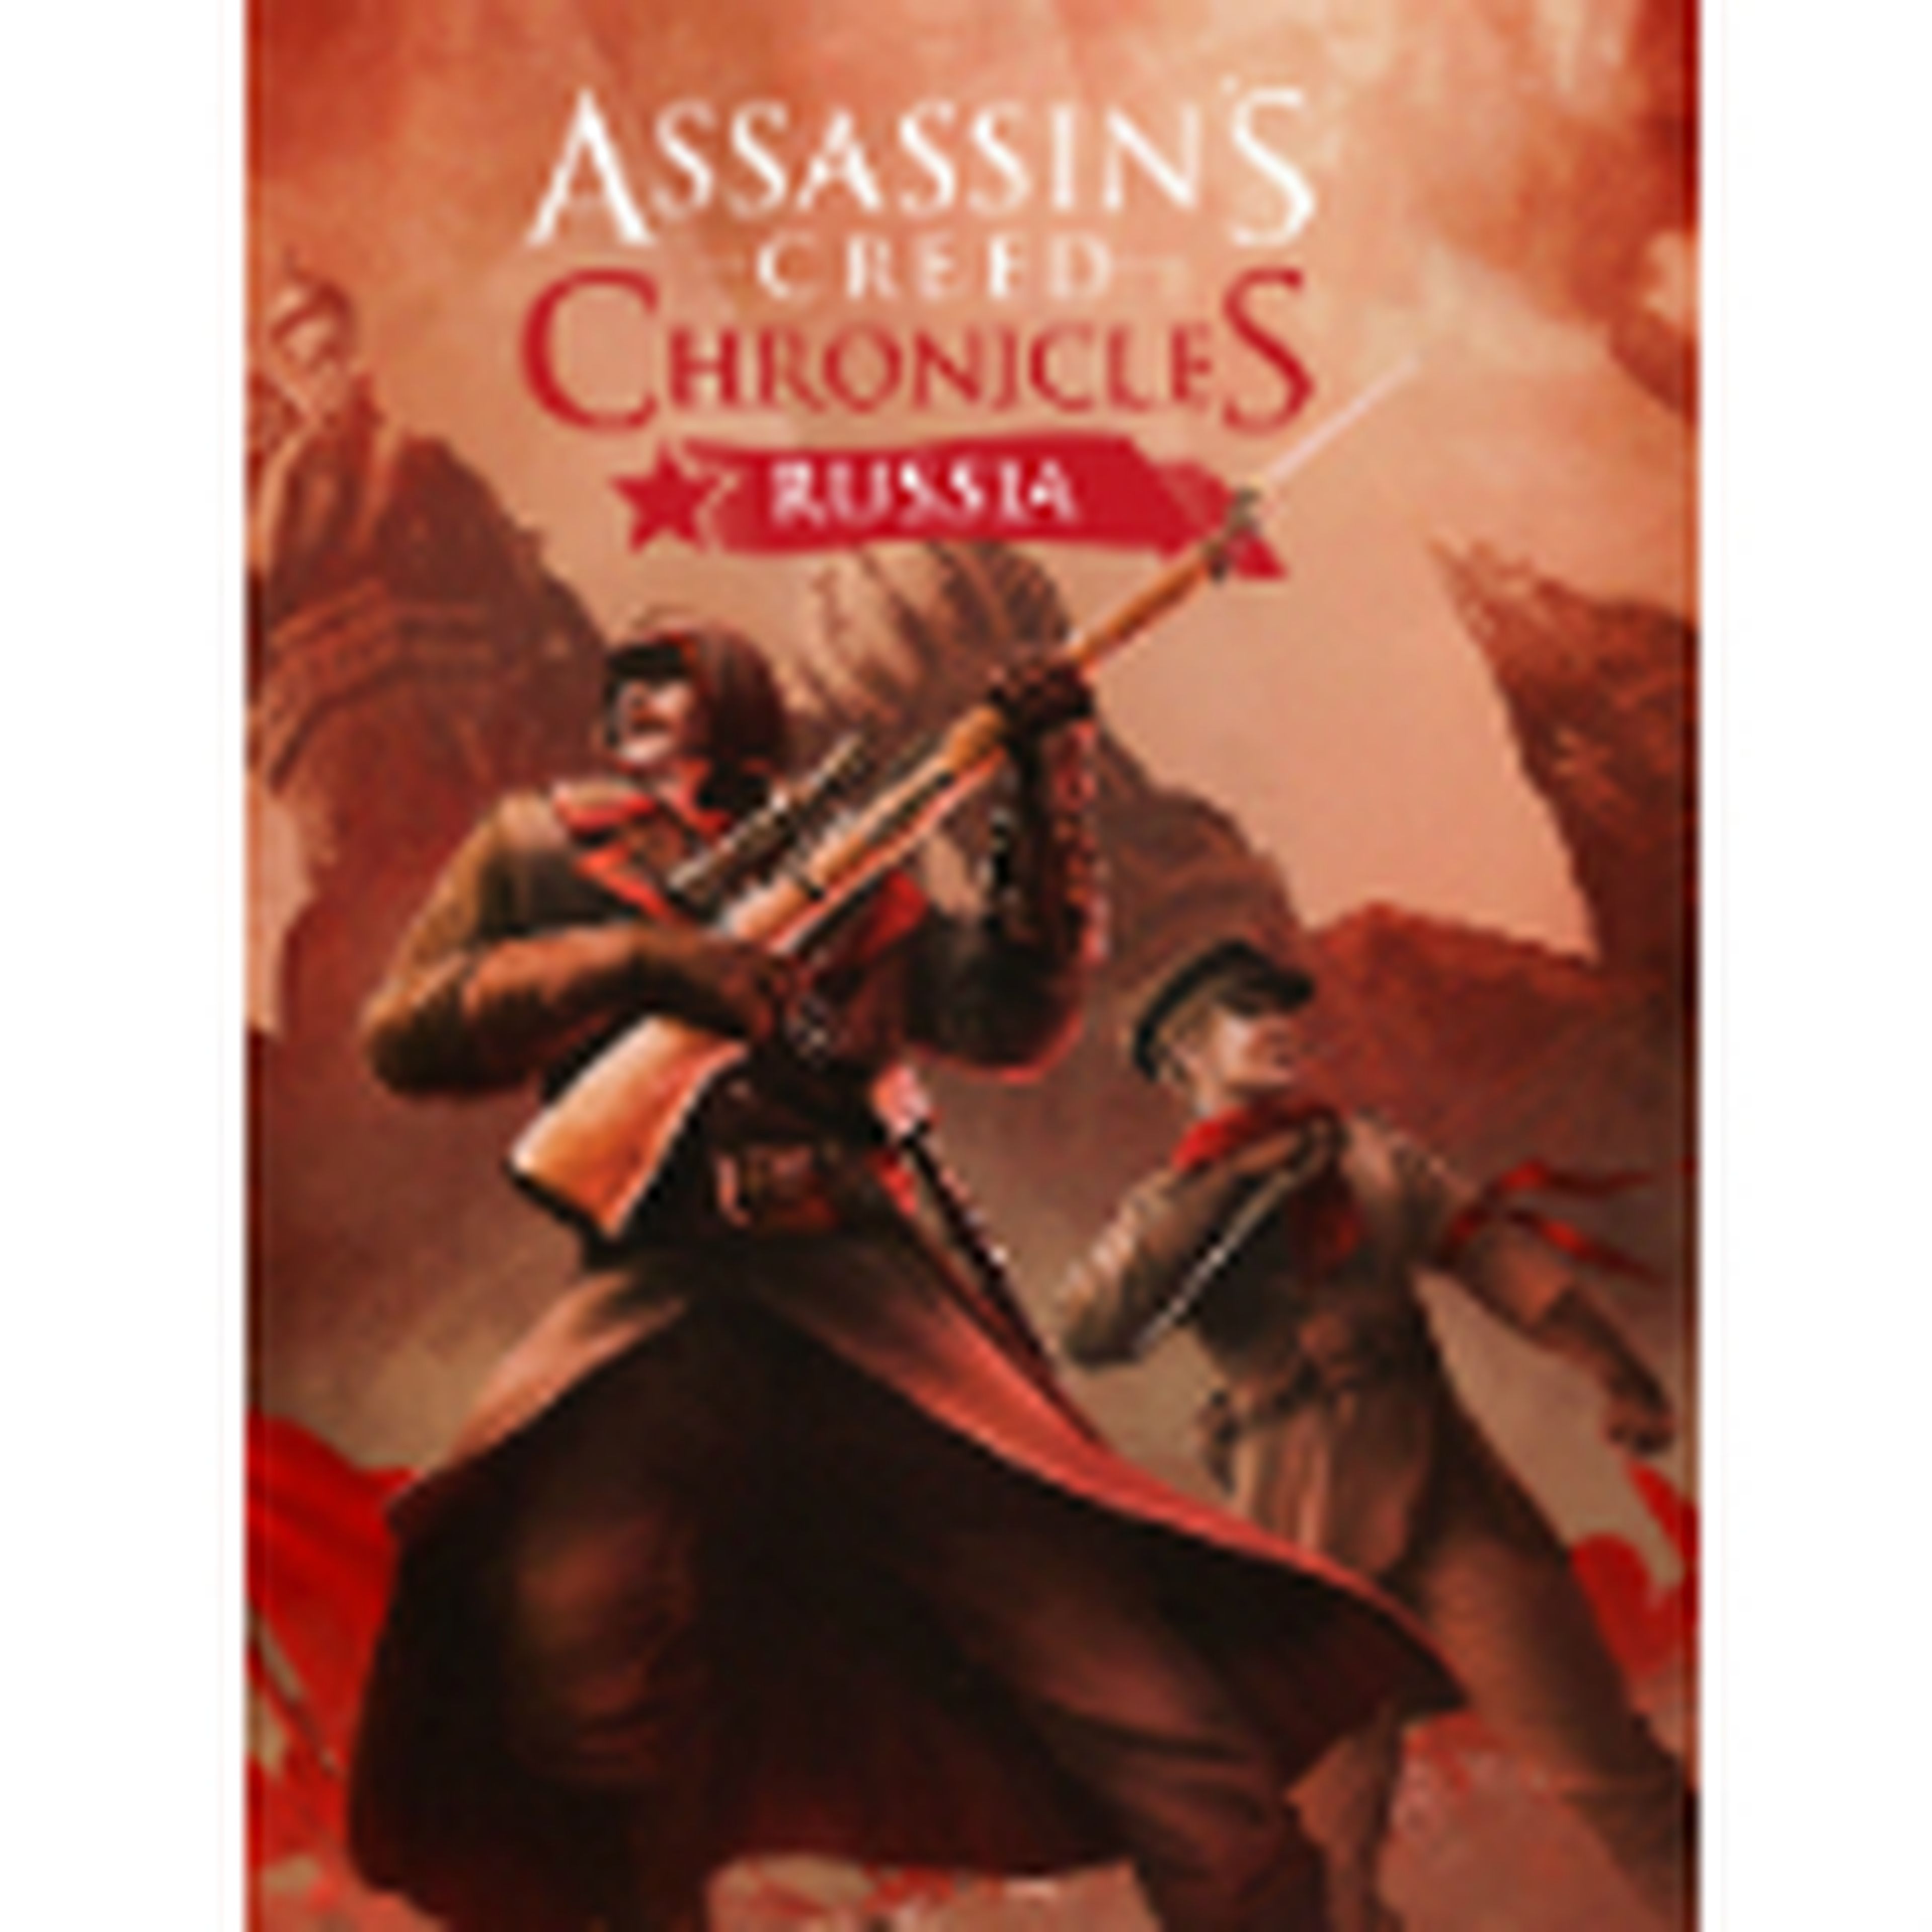 Assassin's Creed Chronicles: Rusia para PS4